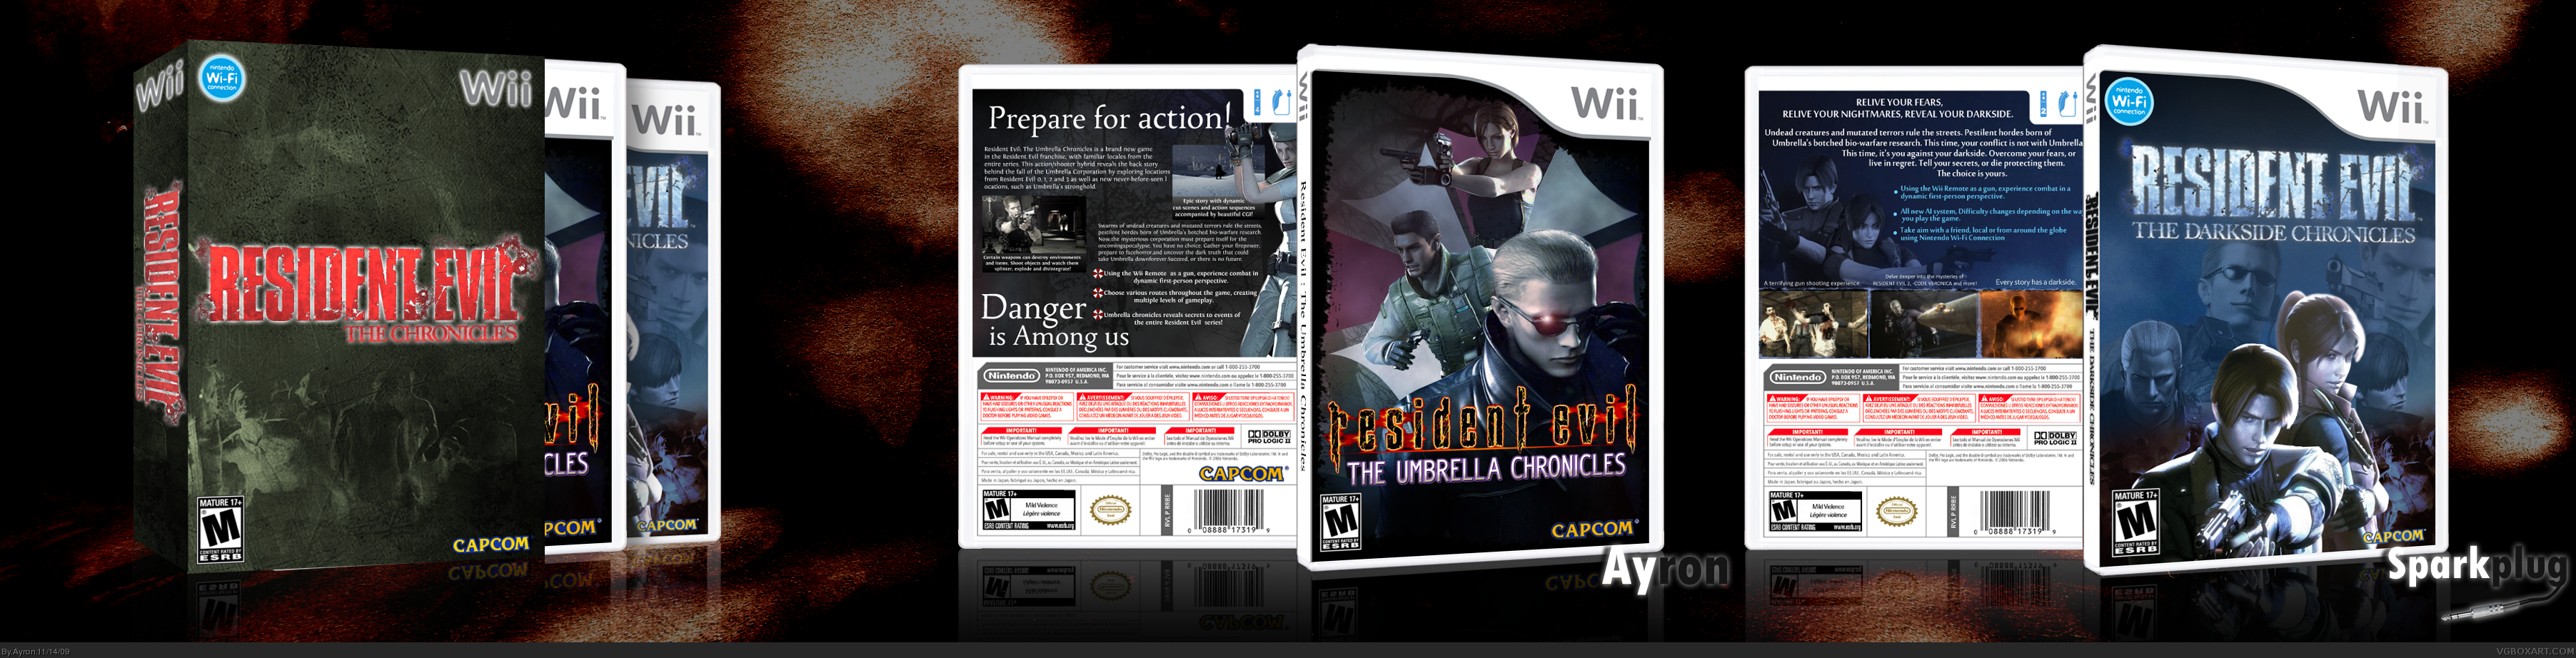 Resident Evil Bundle box cover